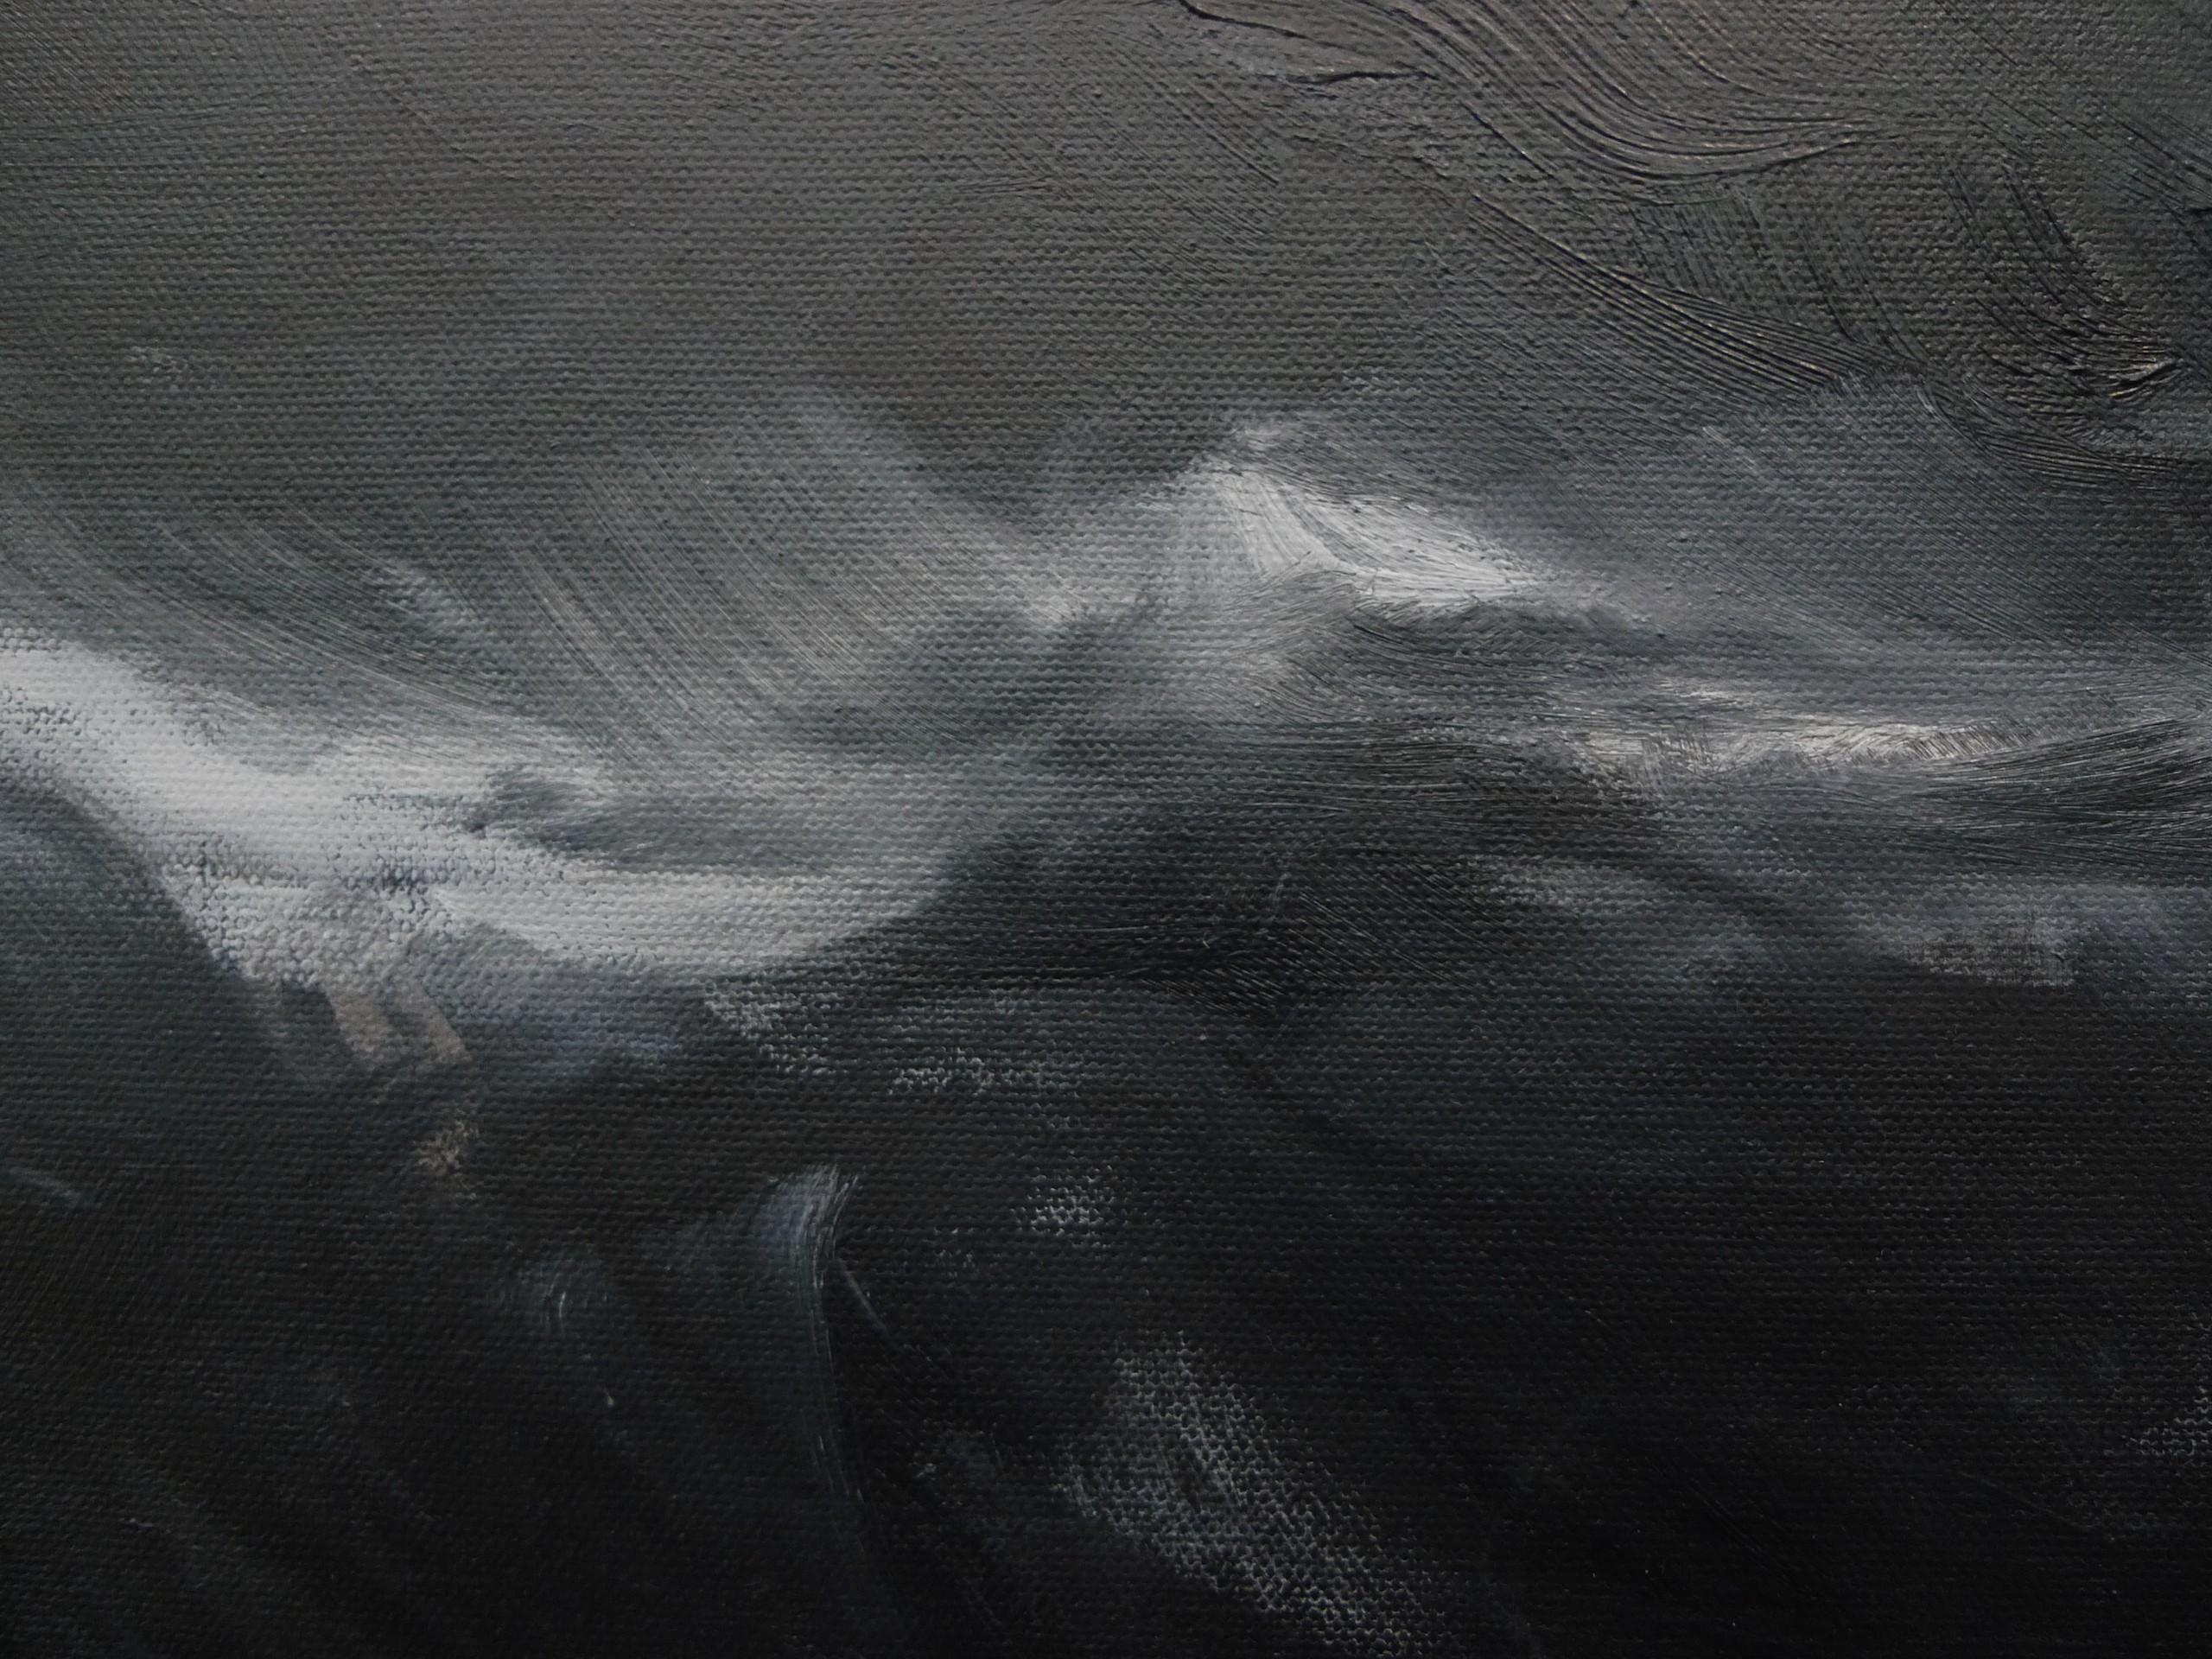 Birth by Franco Salas Borquez - Contemporary oil painting, seascape, wave, dark For Sale 2